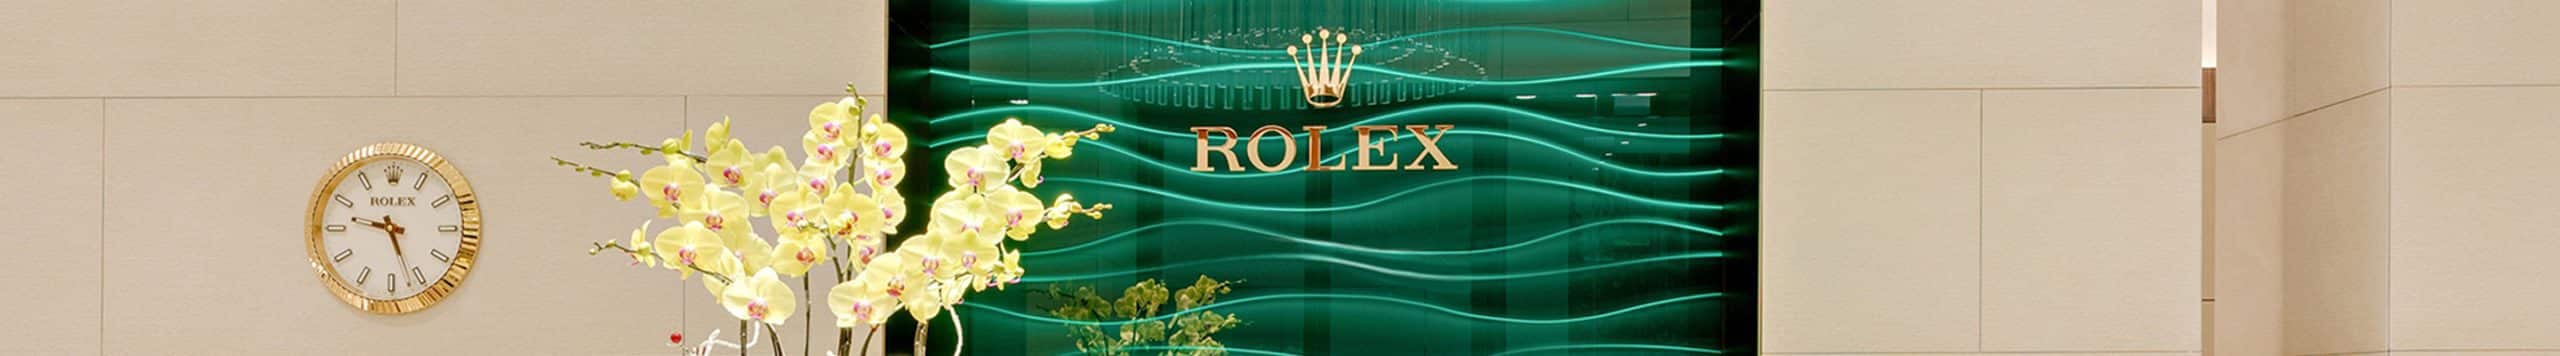 Banner Rolex Contact